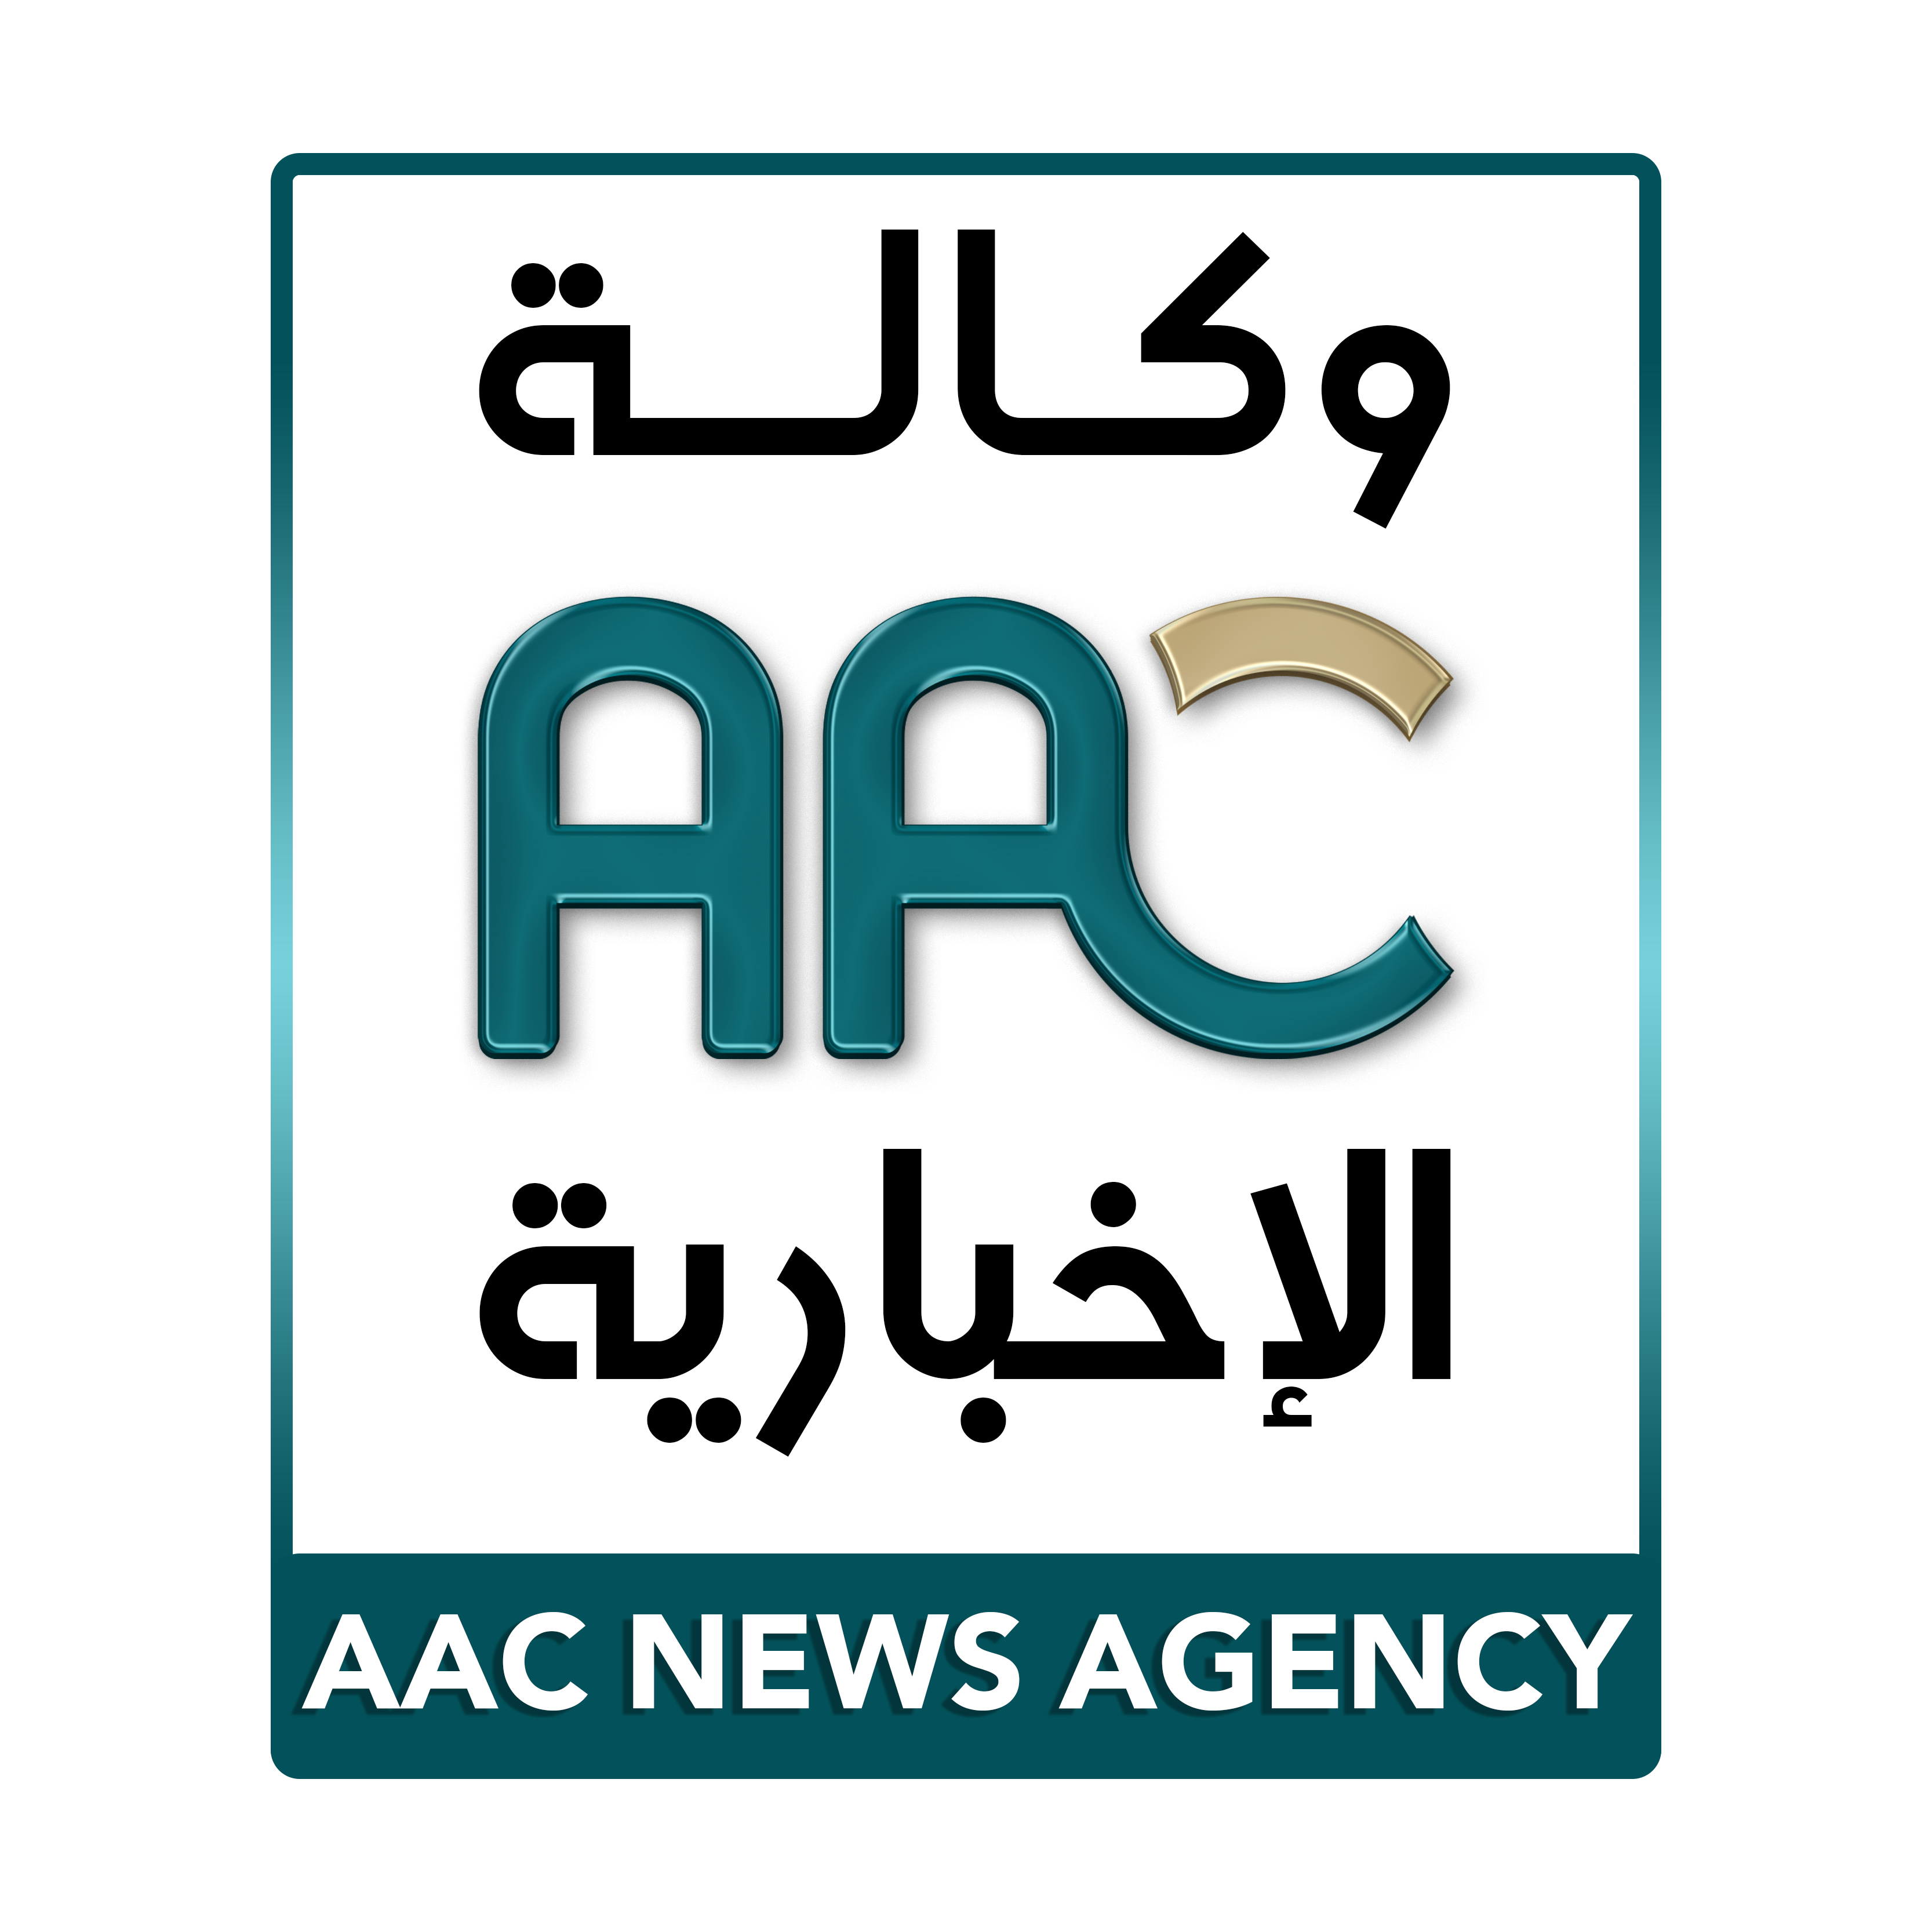 AAC NEWS AGENCY